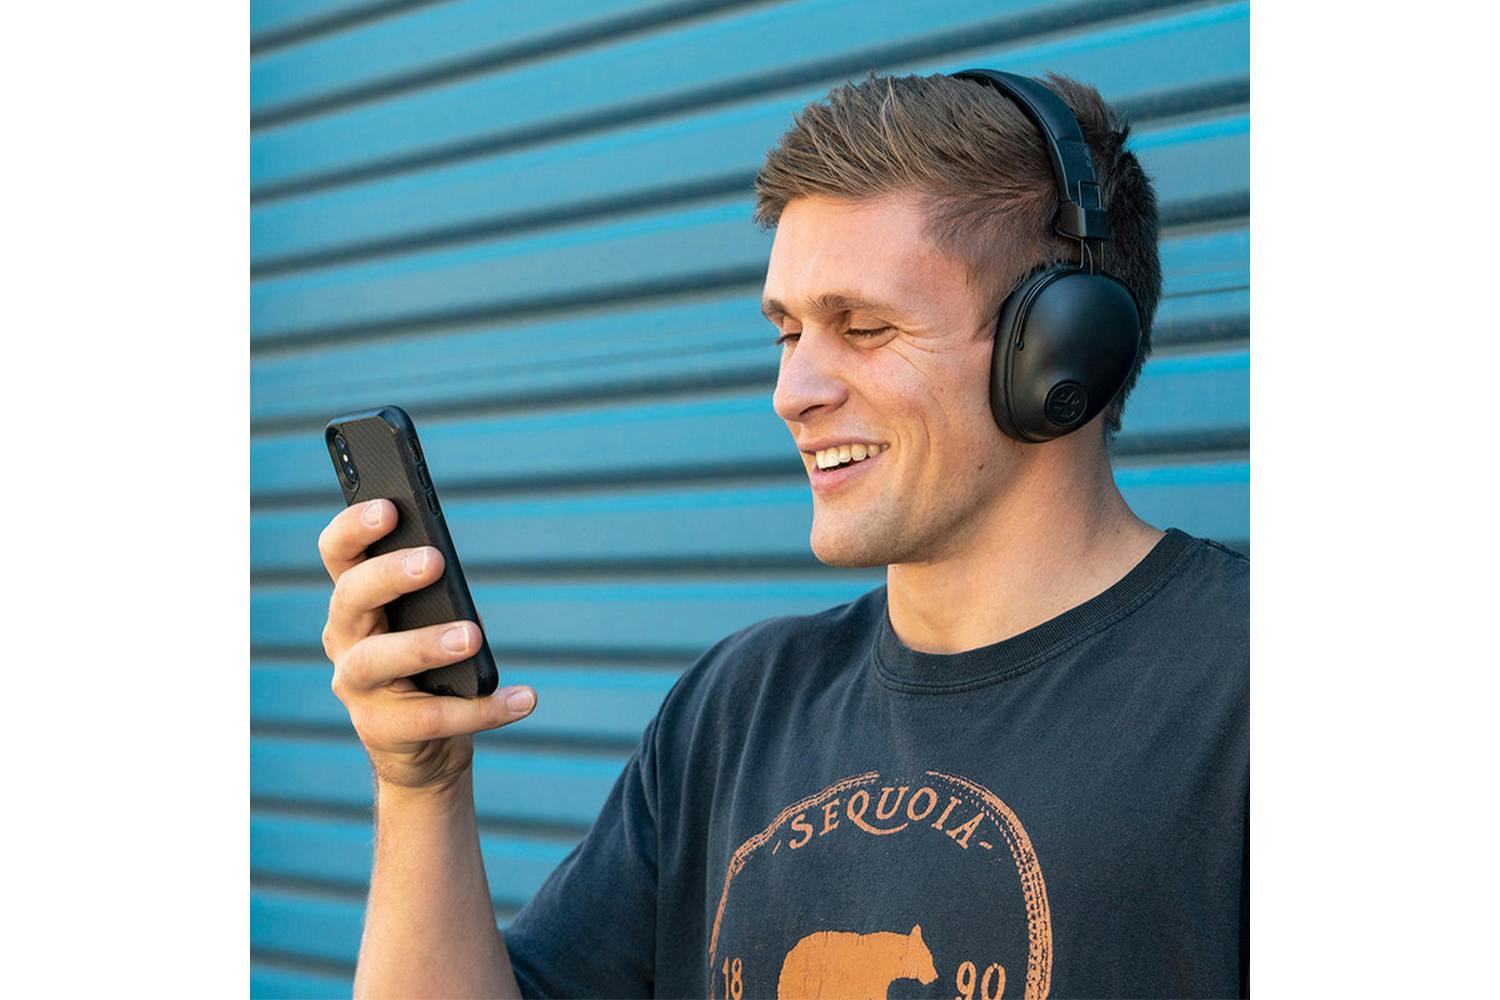 Jlab Studio Pro Wireless Over-ear Headphones | Black